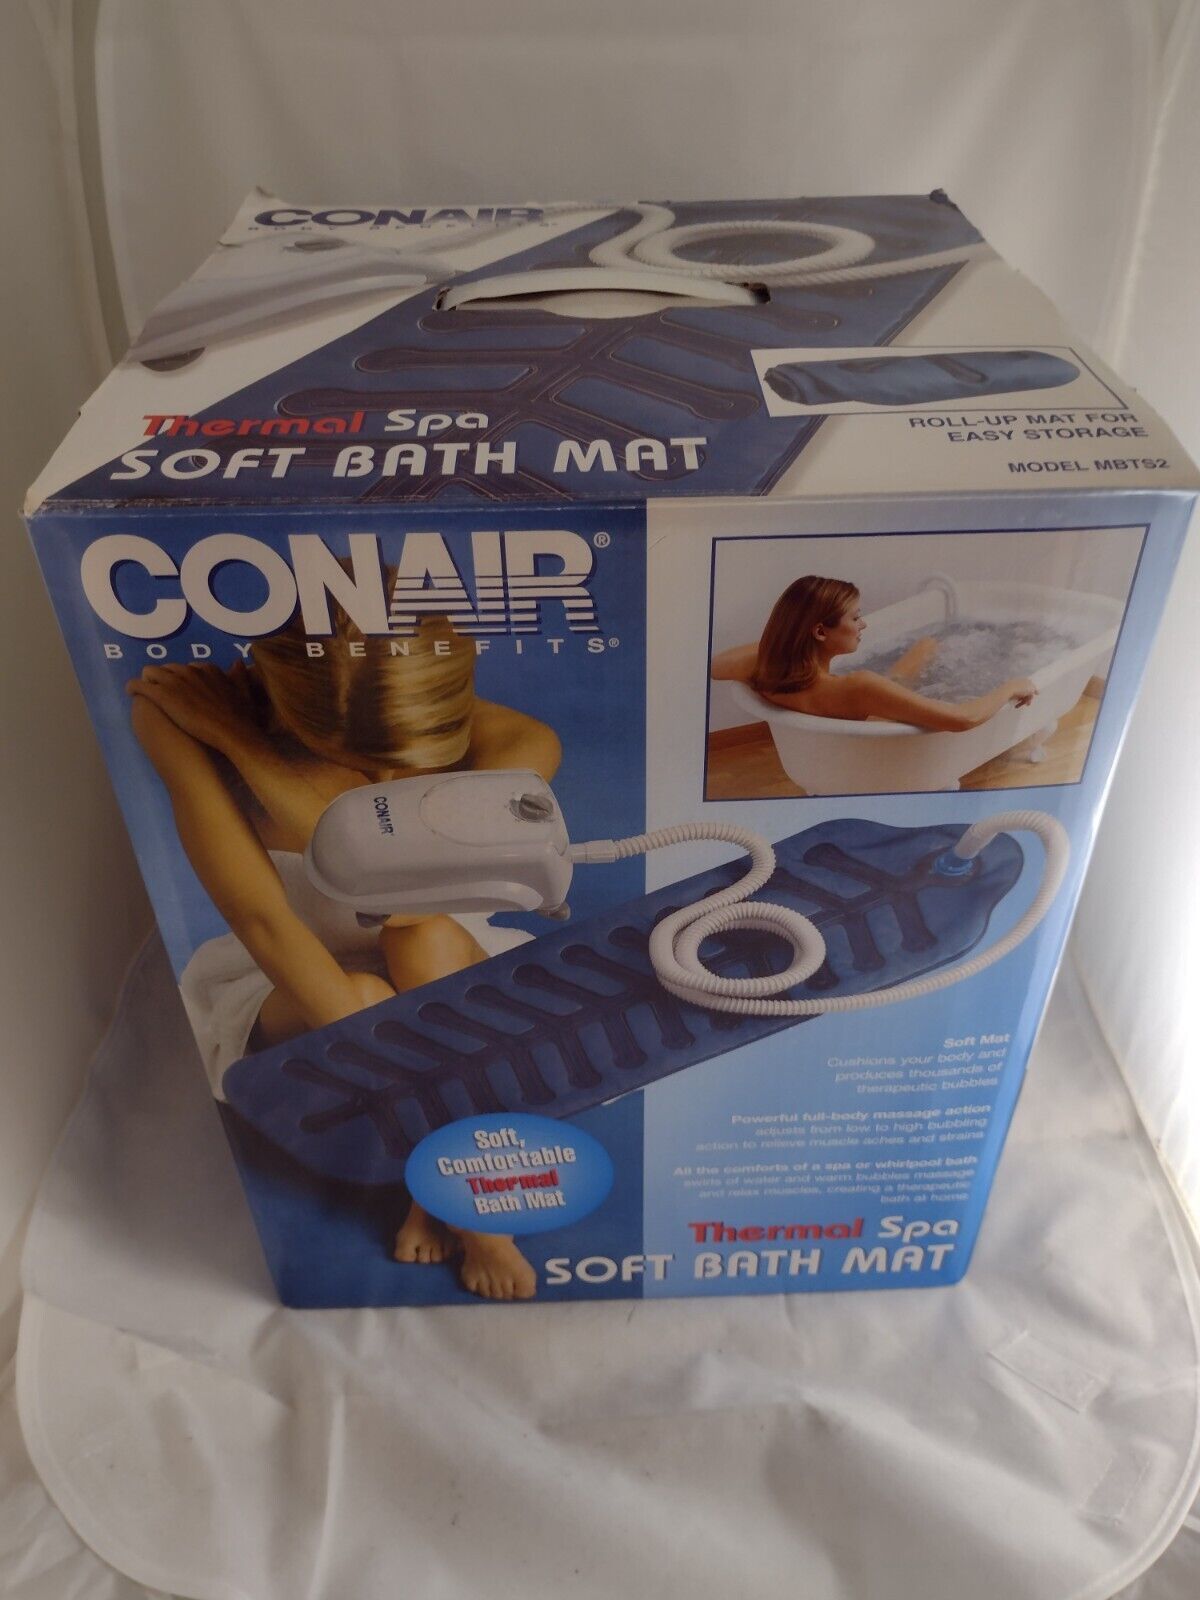 CONAIR BODY BENEFITS MBTS3 THERMAL SPA MASSAGING BATH MAT NEW NIB